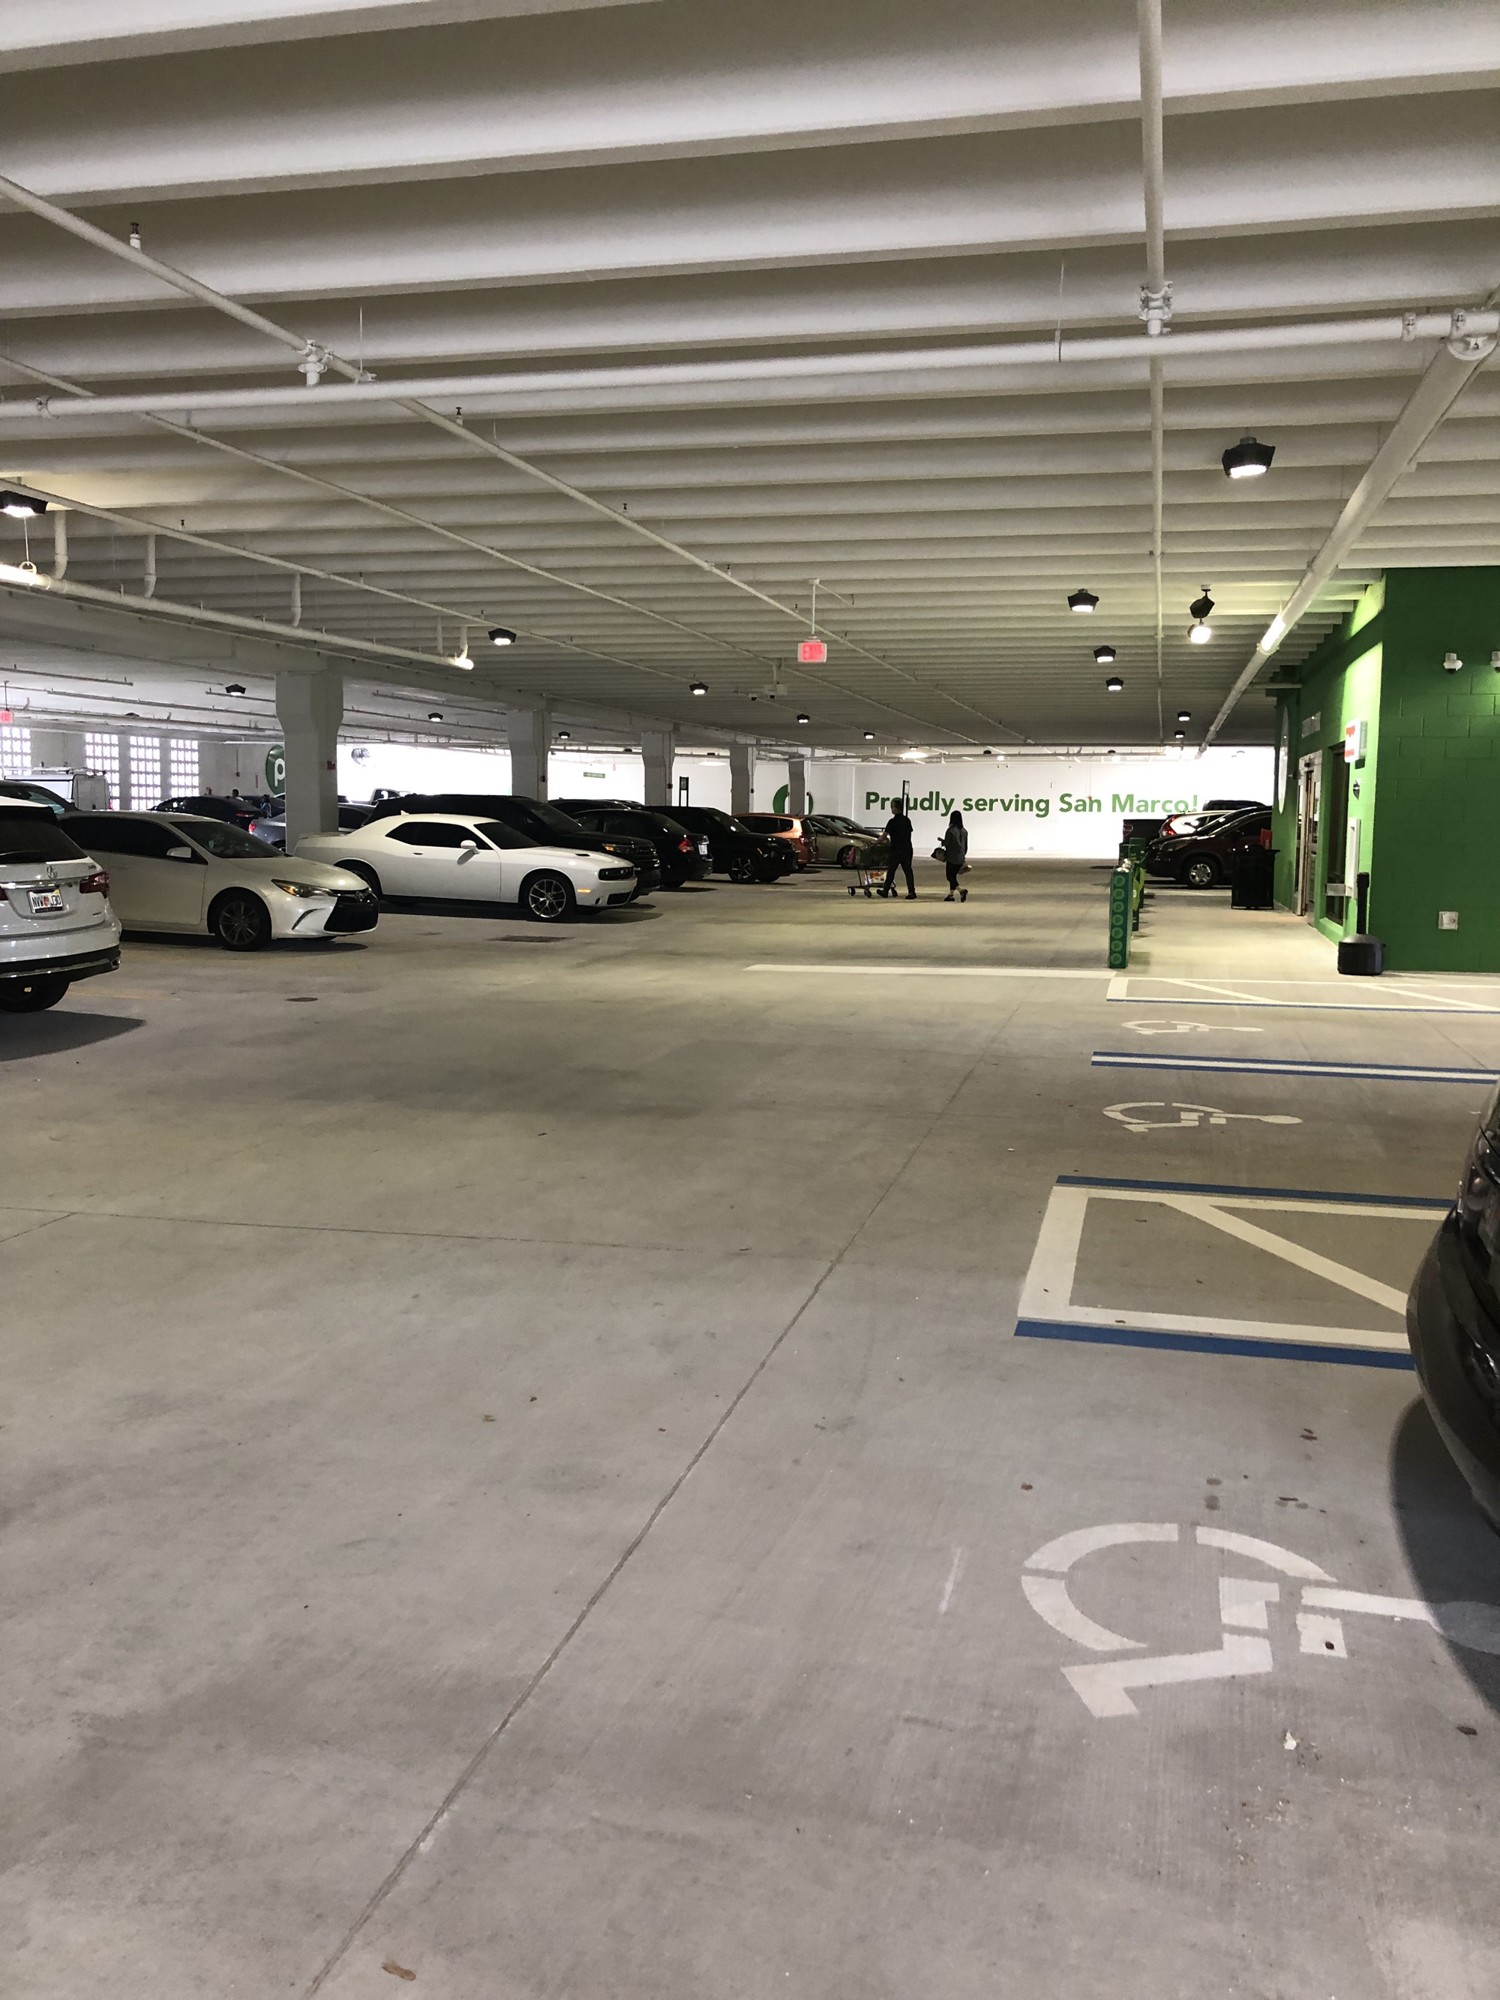 On Aug. 12, the Publix parking garage was dry. (Karen Brune Mathis)